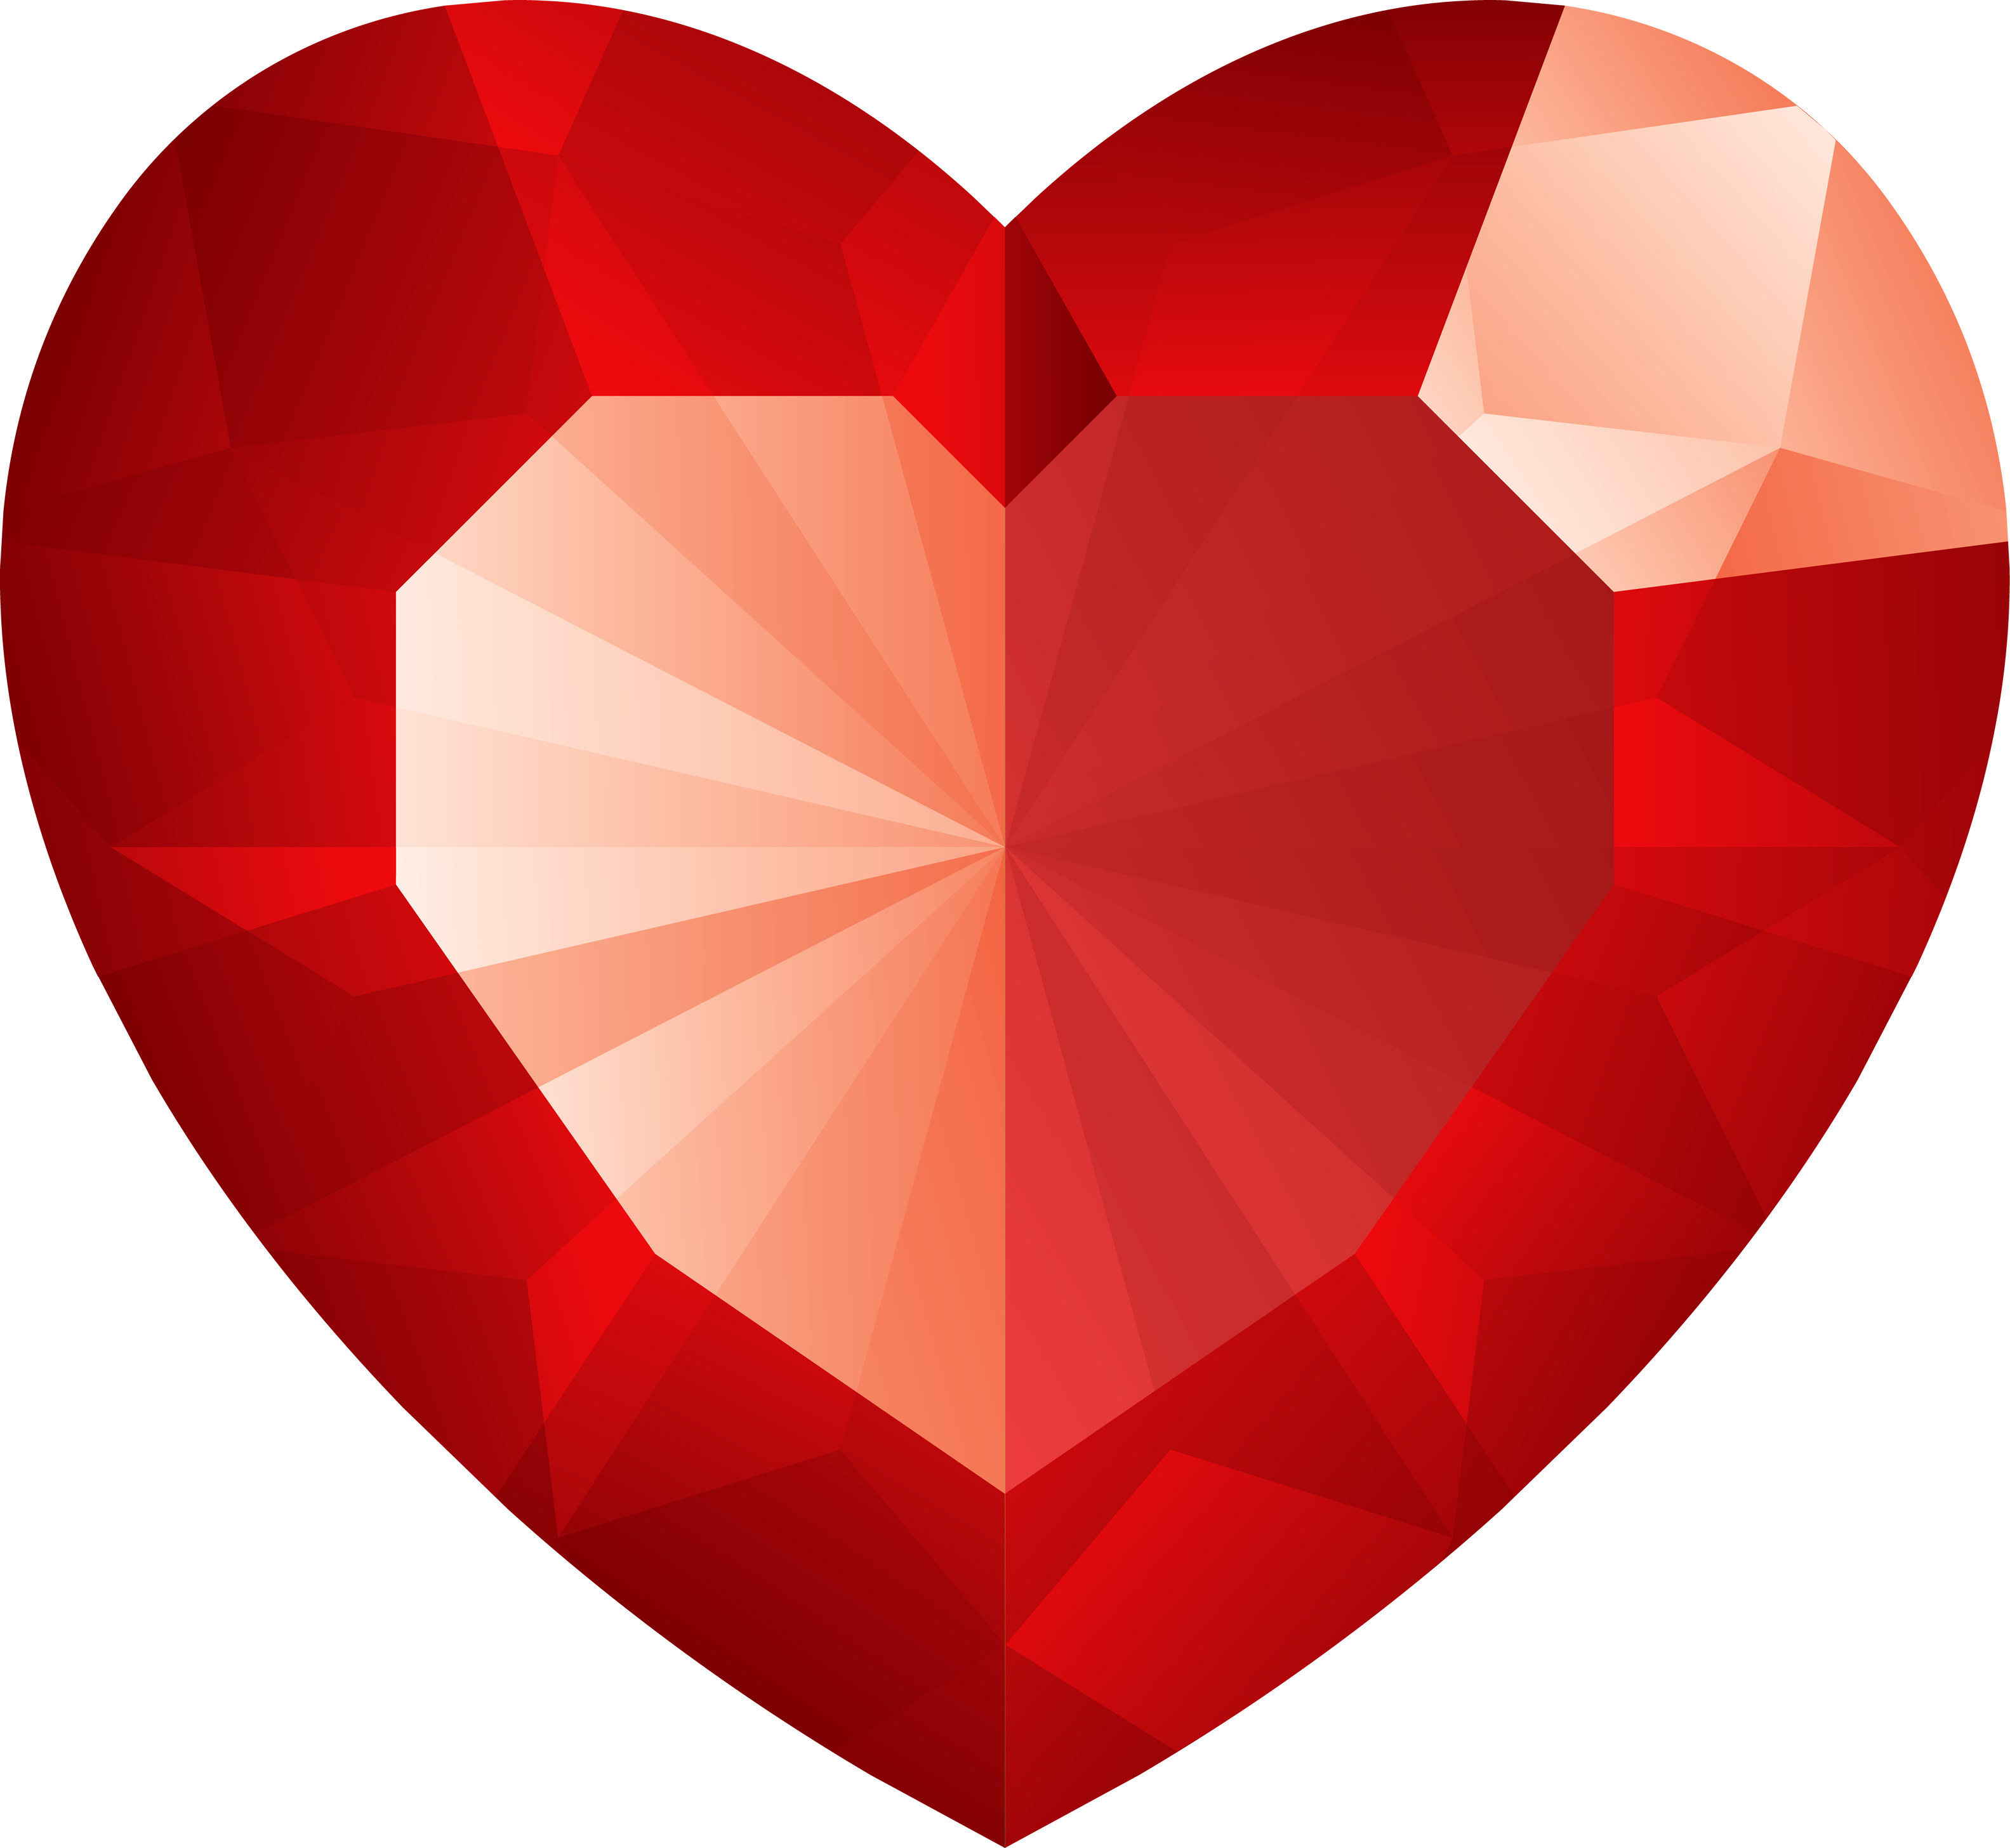 Download Dark Red Heart Transparent HQ PNG Image | FreePNGImg